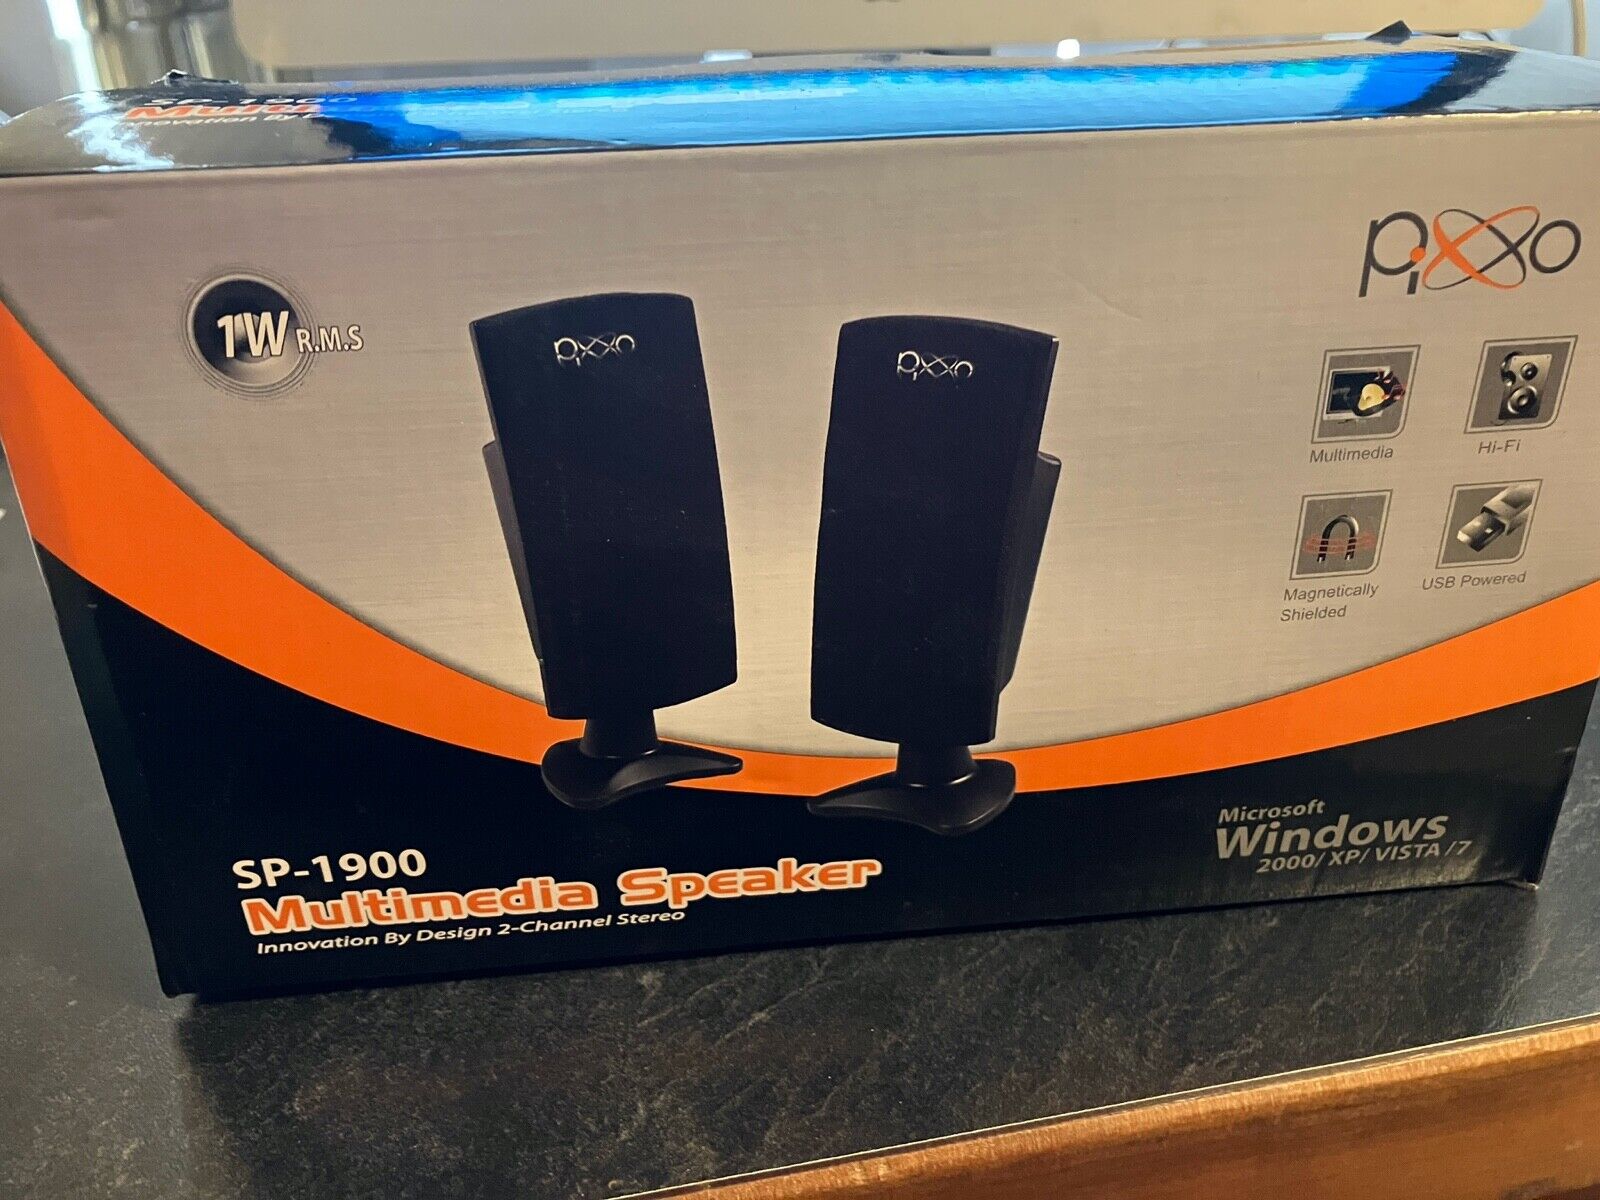 Pixxo Multimedia Speakers, Sealed